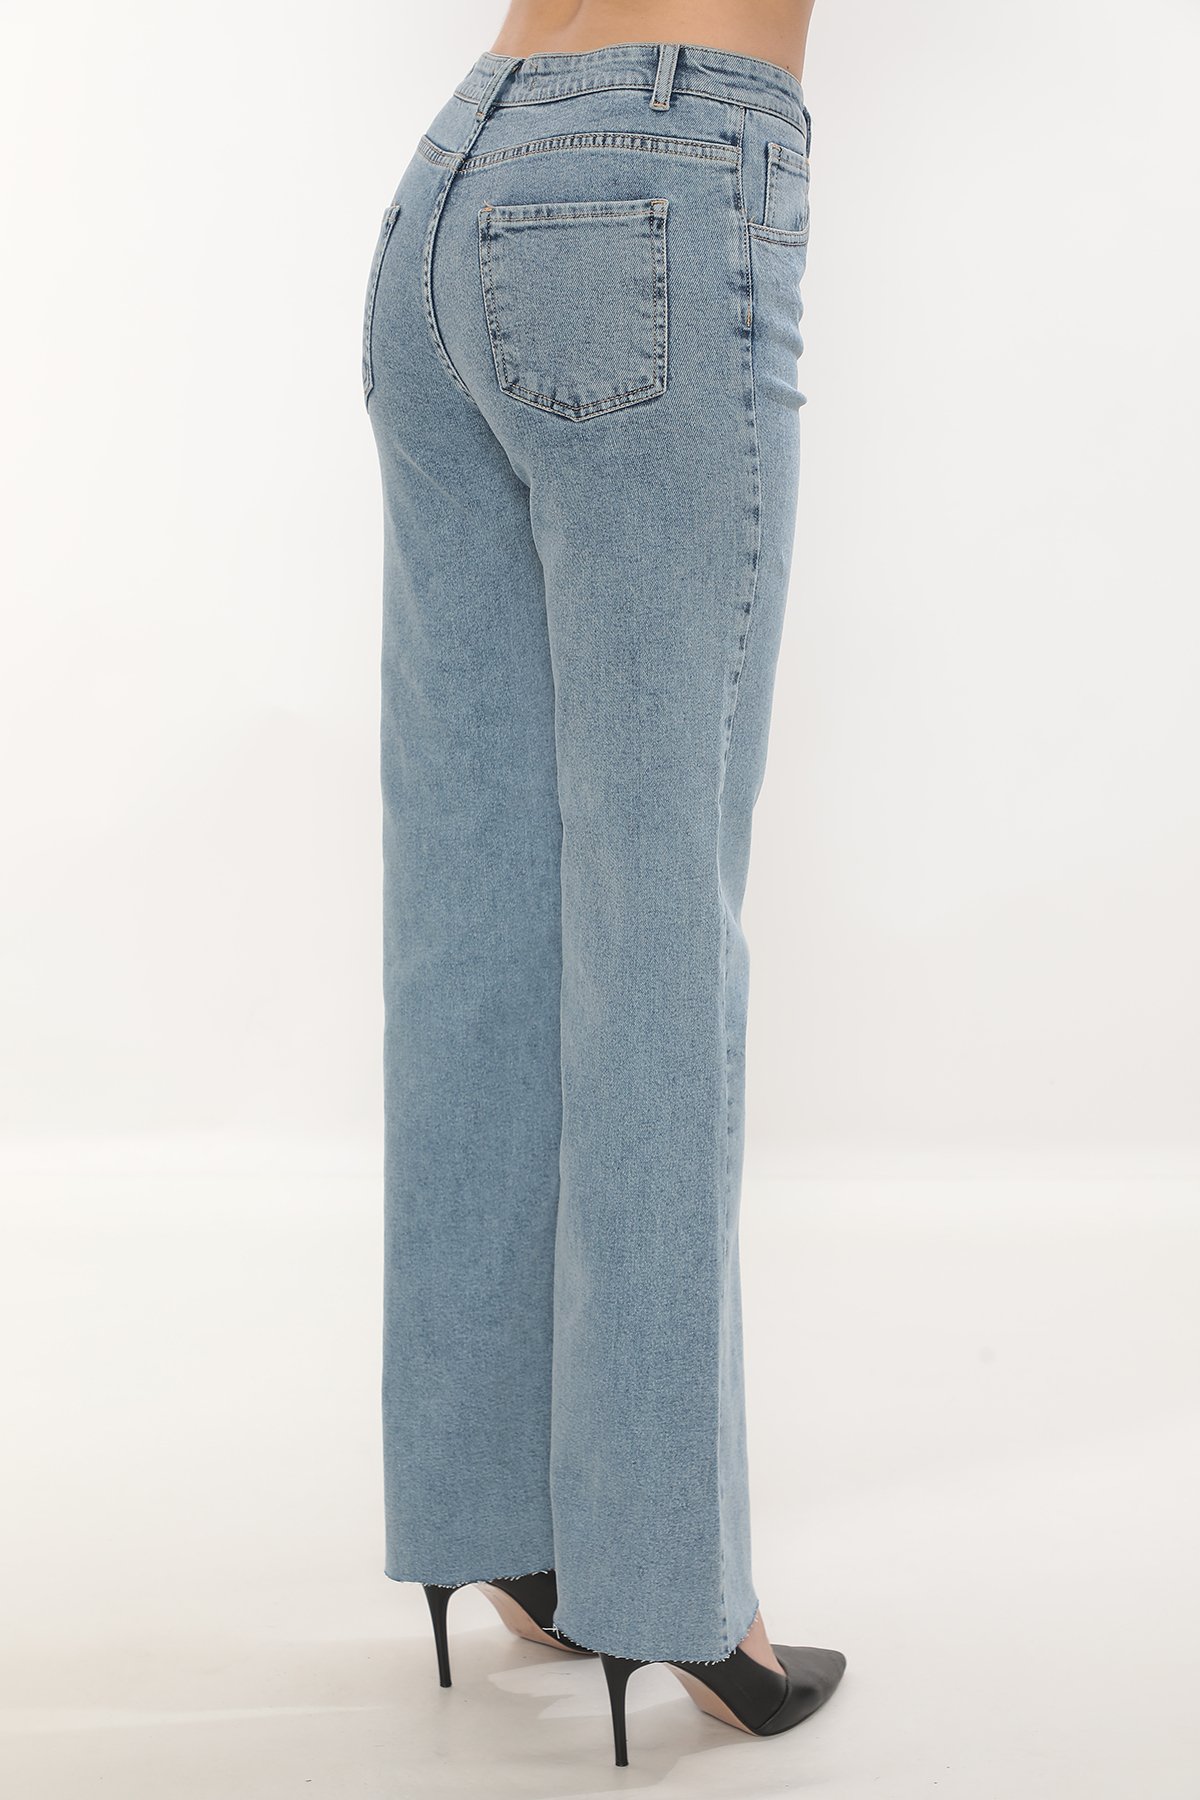 Jack Black 5 High Waist Washed Button Detailed Women's Blue Jean